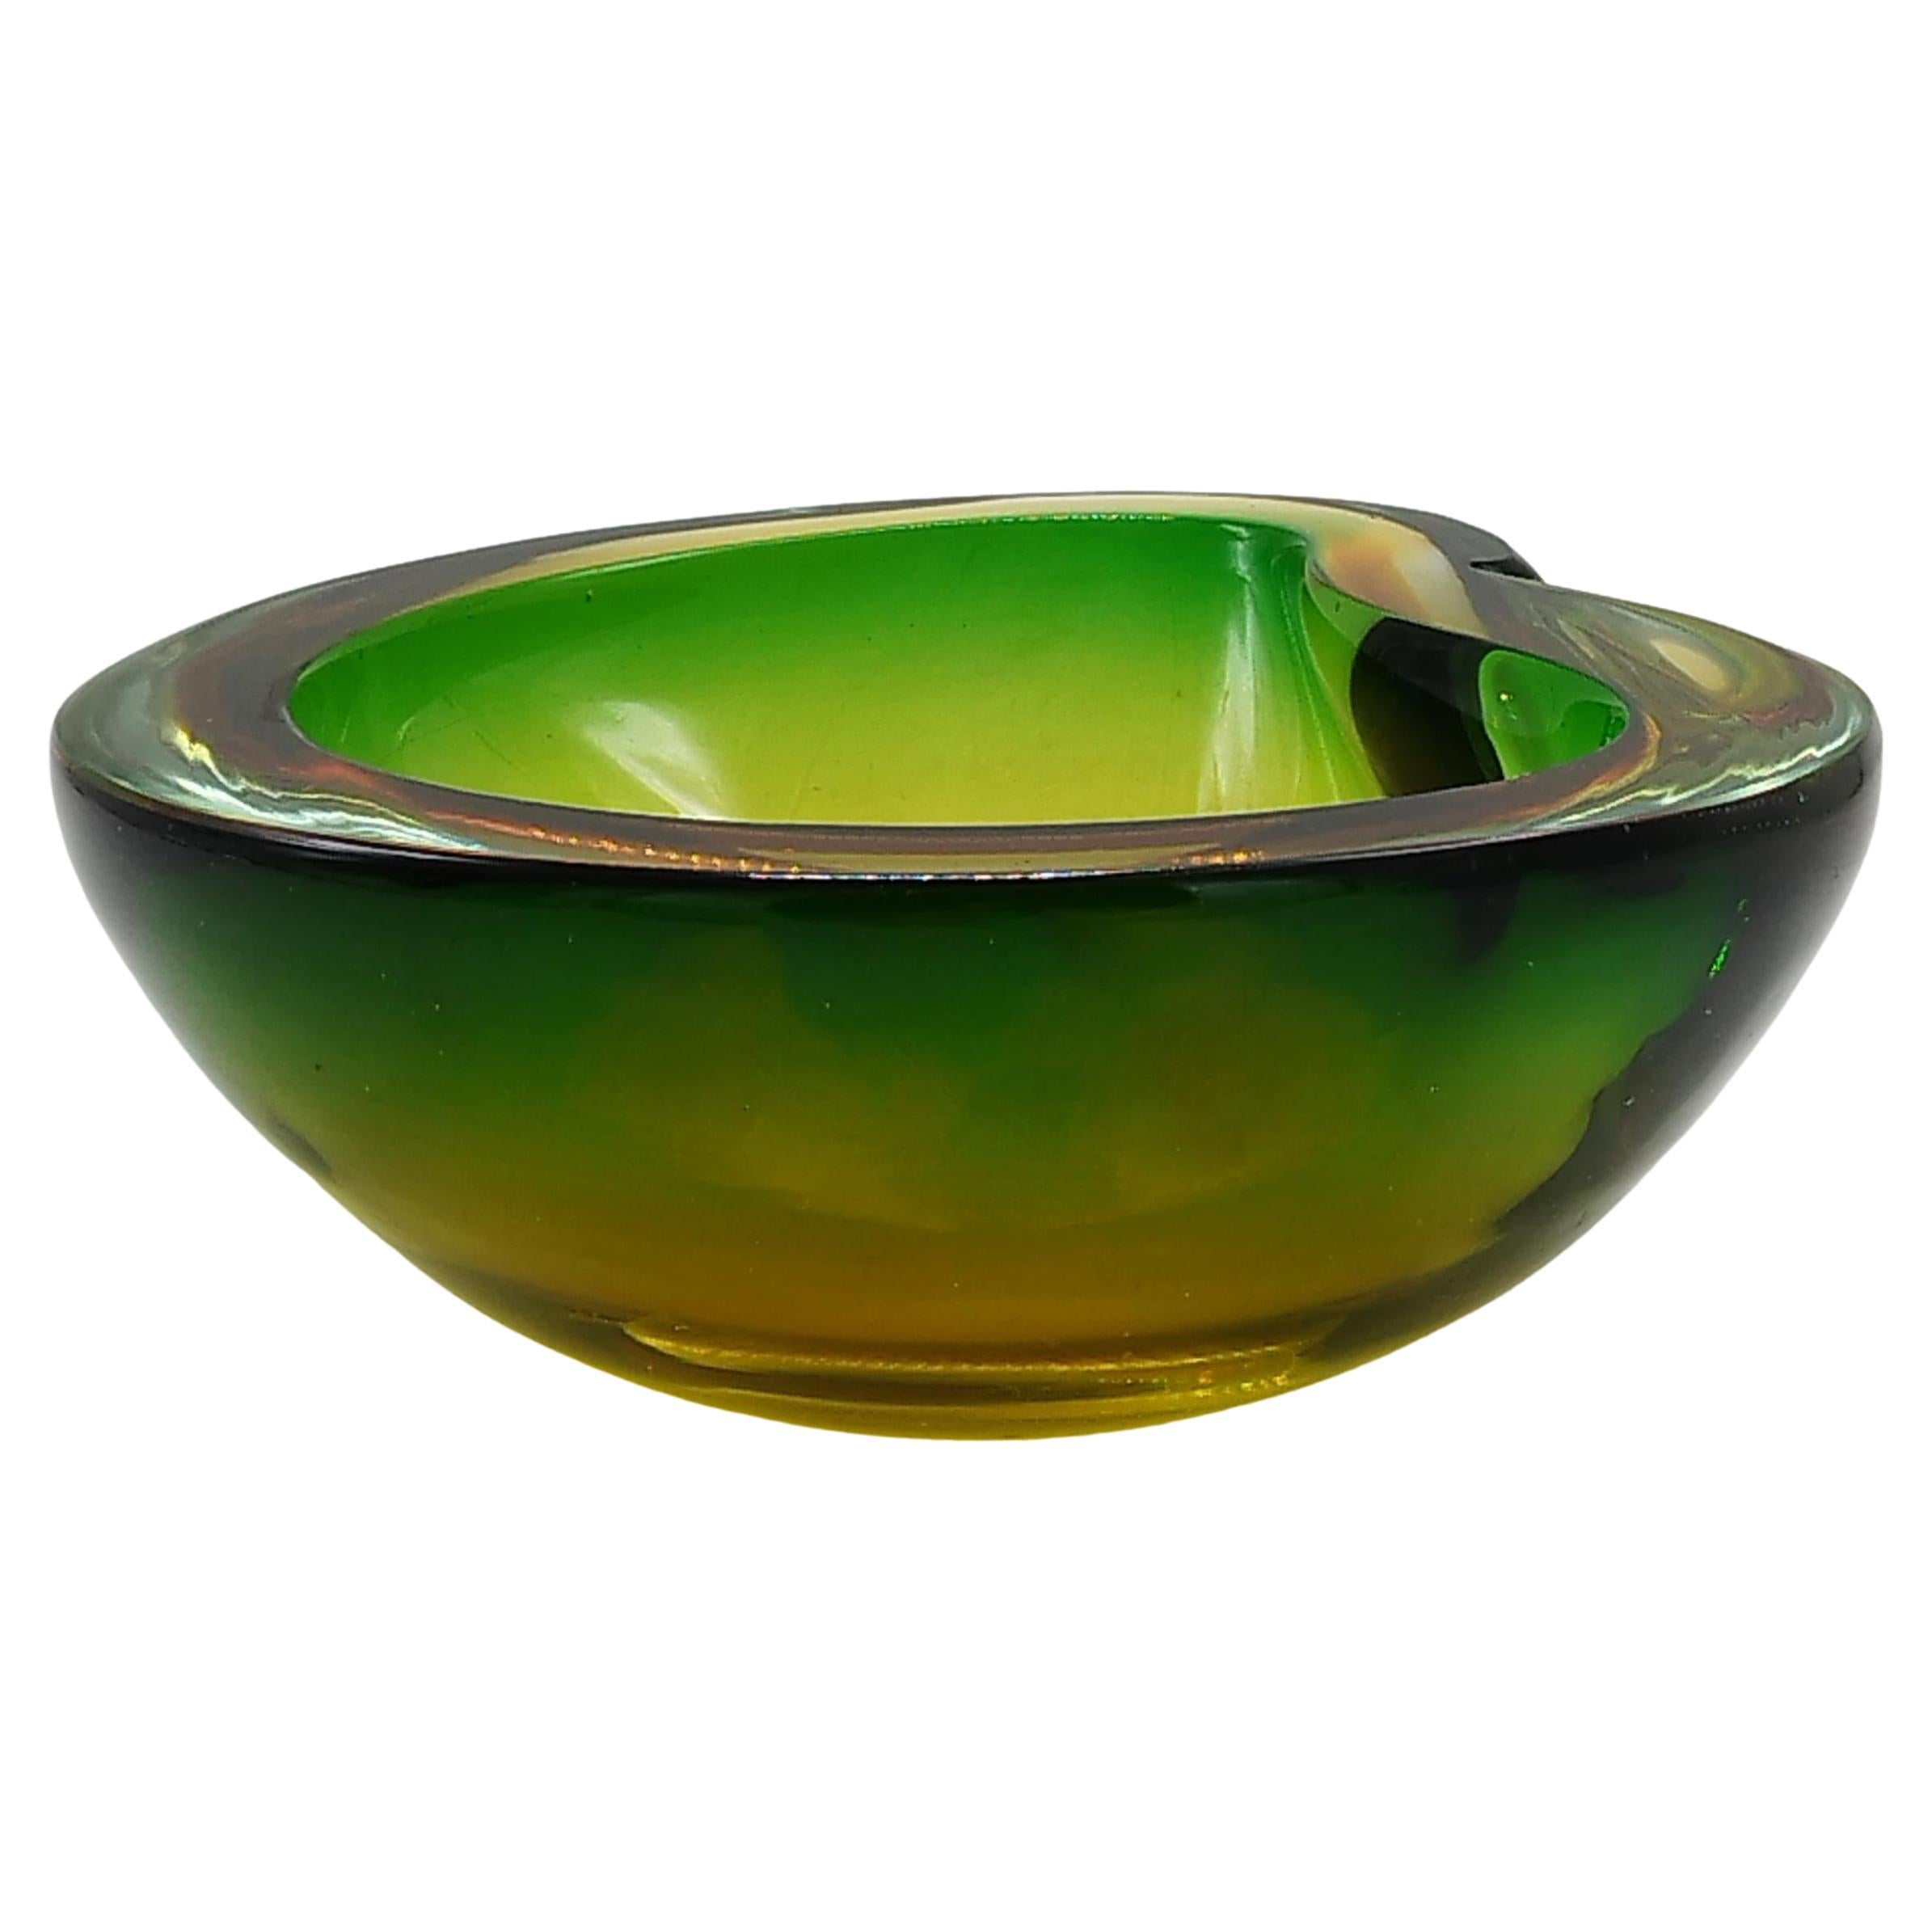 Flavio Poli for Seguso Green and Yellow Murano Glass Bowl, Italy, 1960s For Sale